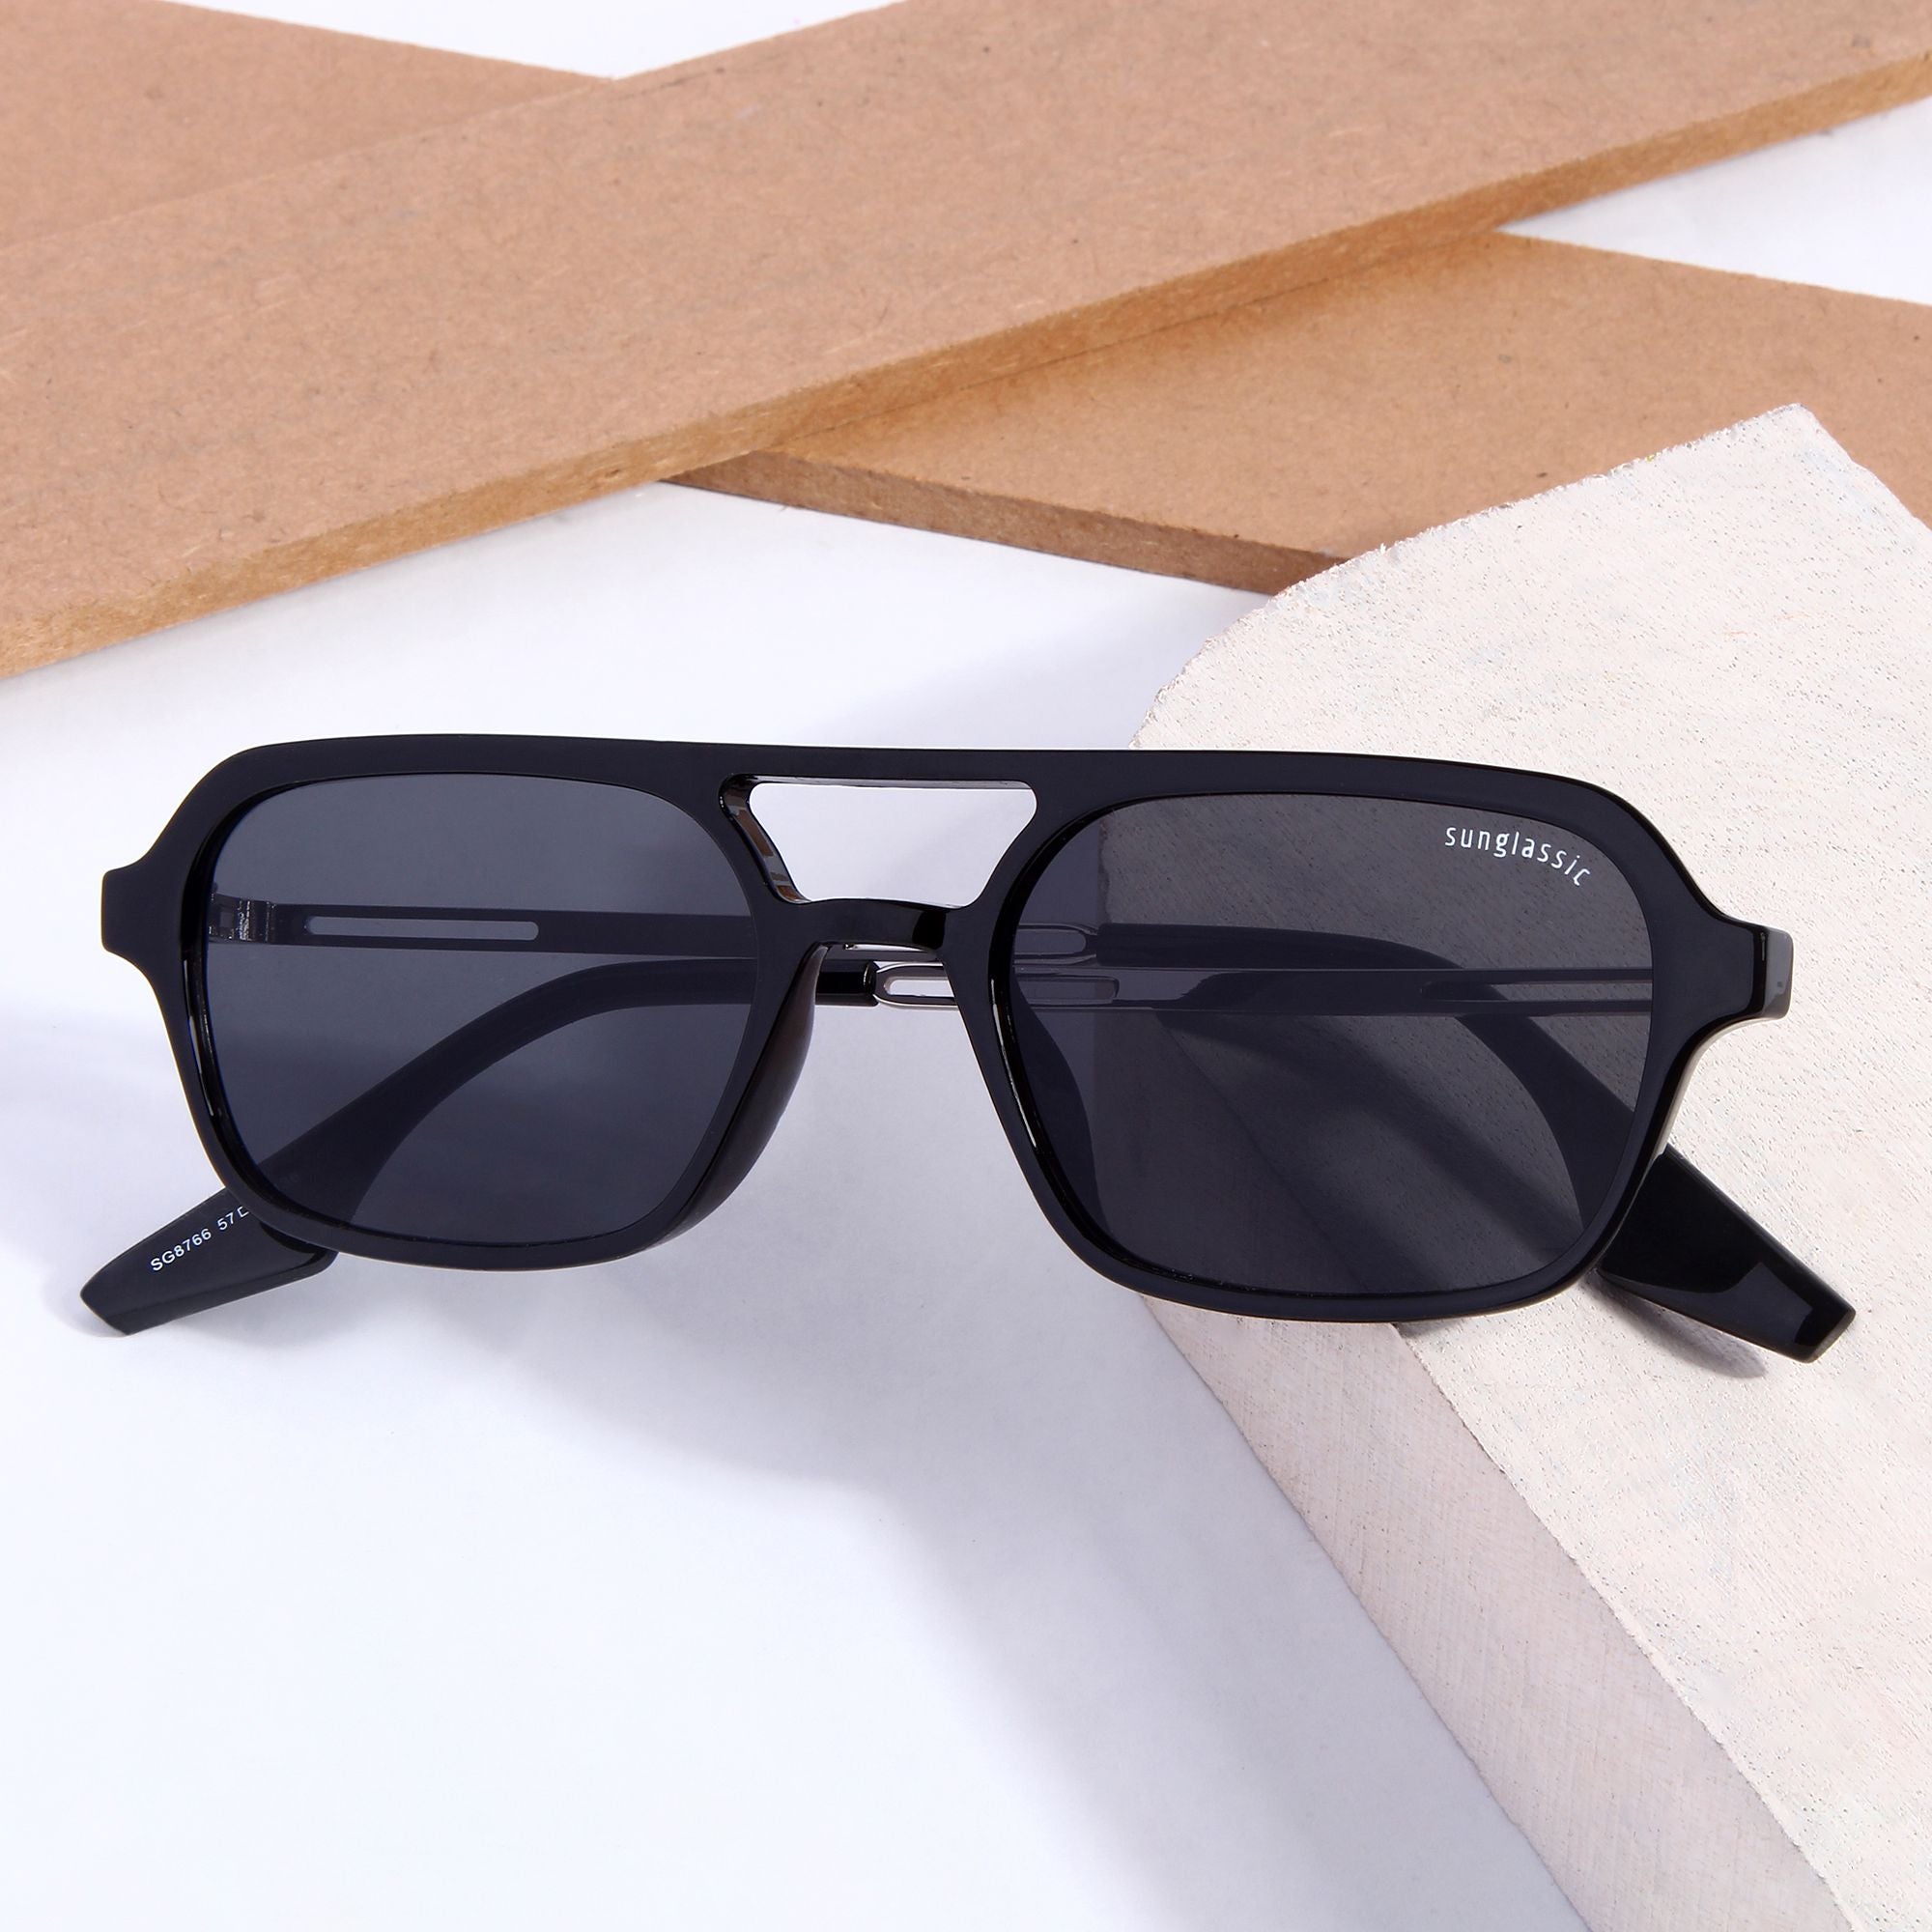 COLTON. Full Black Rectangle Sunglasses